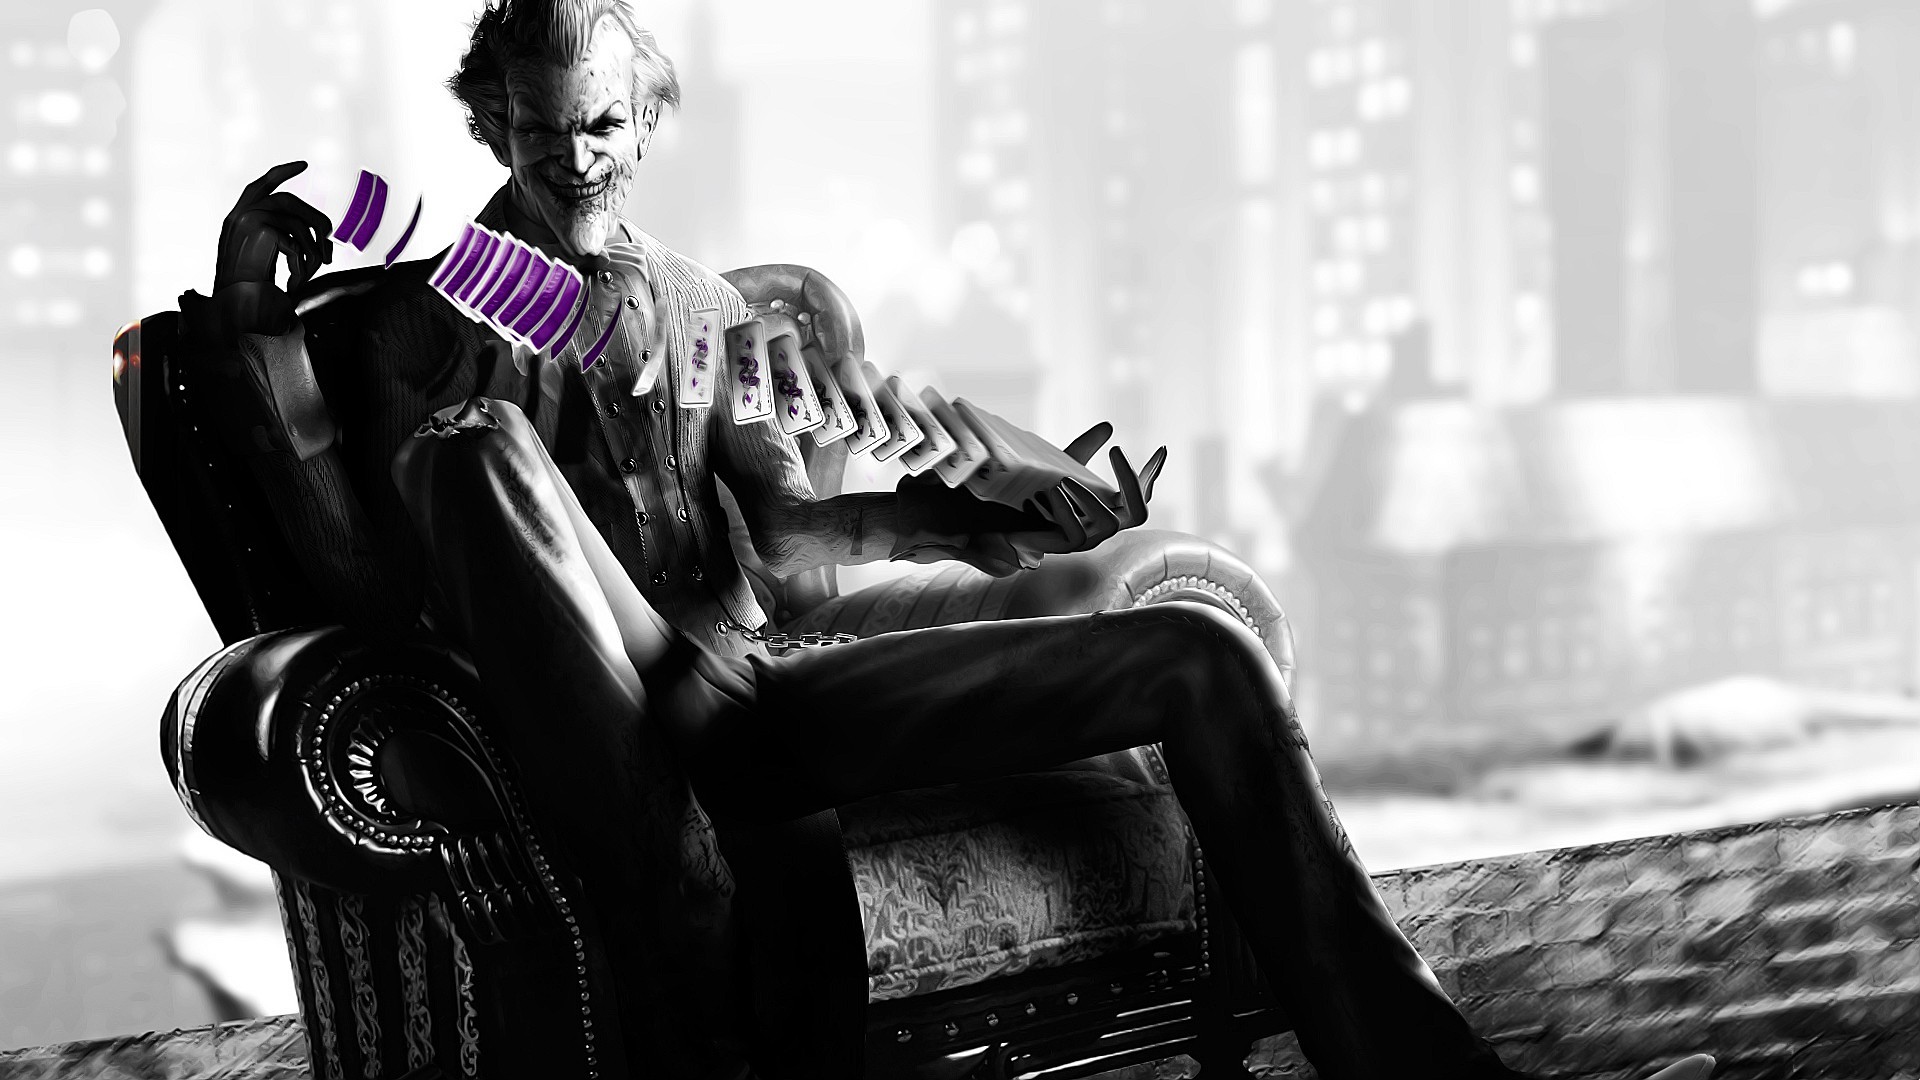 1920x1080 Awesome The Joker "Let's Play" Batman Desktop Wallpaper HD Wallpaper From  ...